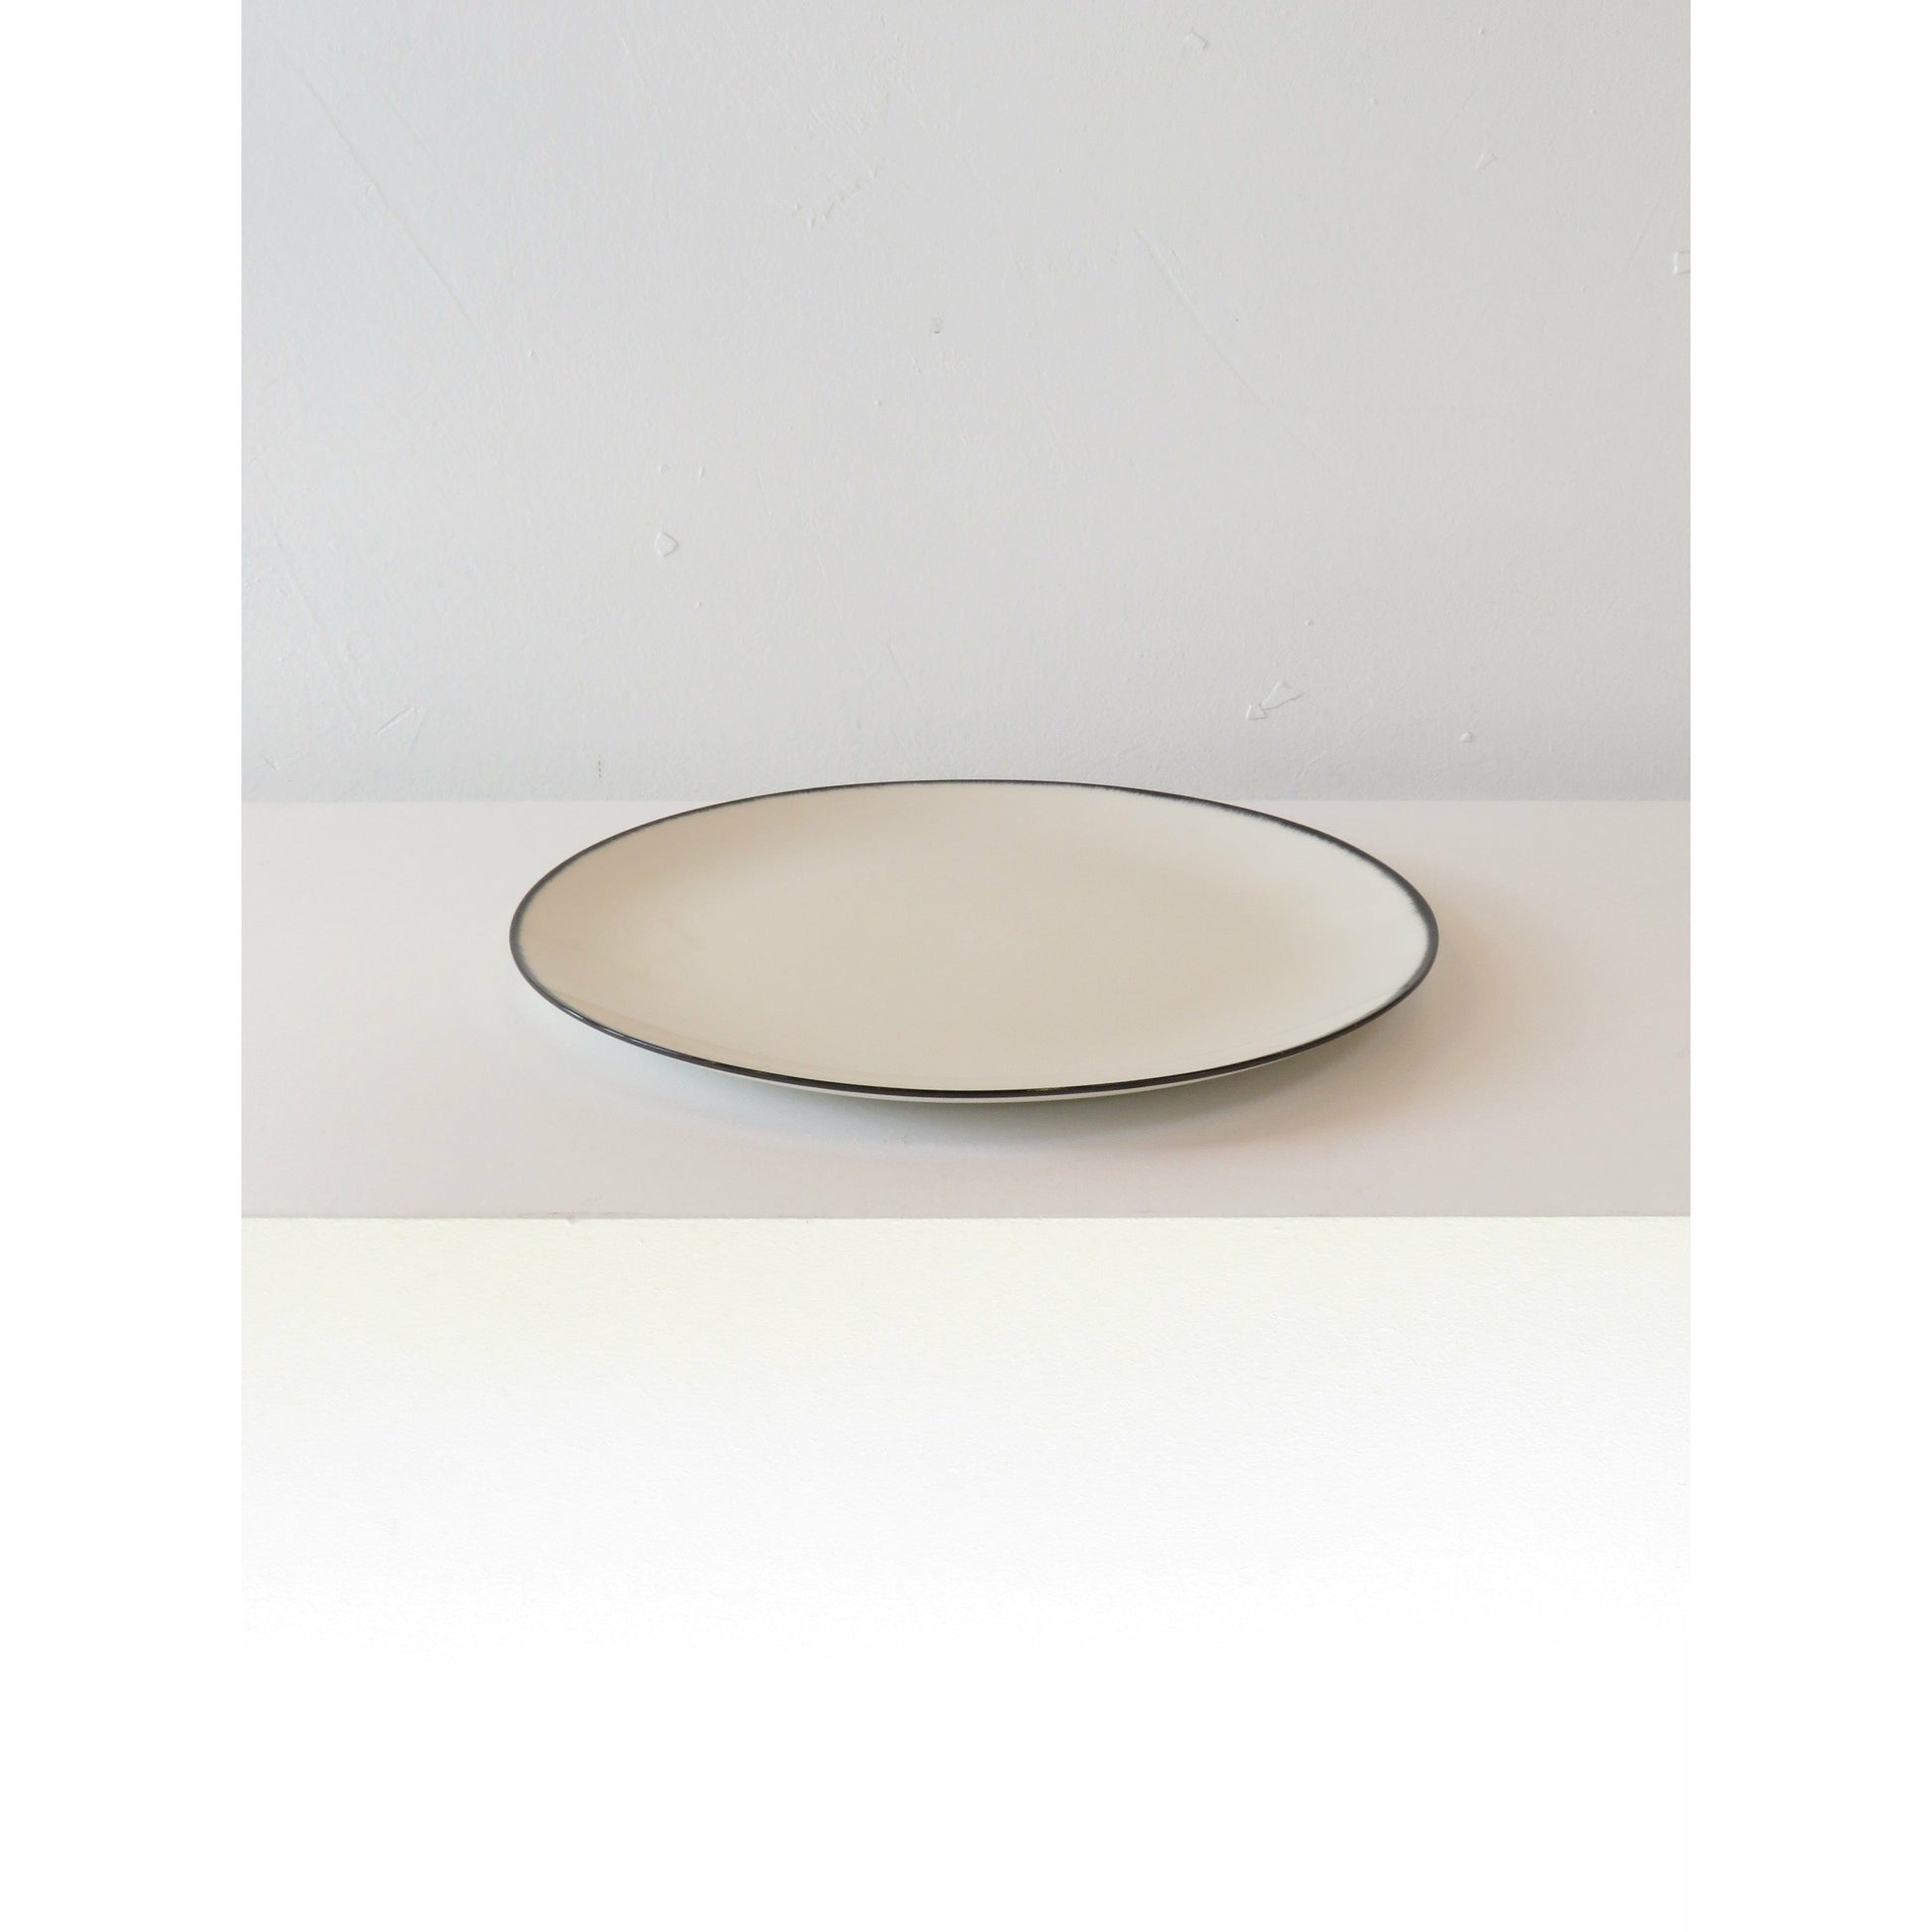 Ann Demeulemeester Home Home 28 centimeters / Off-white & black / Porcelain Ann Demeulemeester for Serax 28 cm plates (set of two)